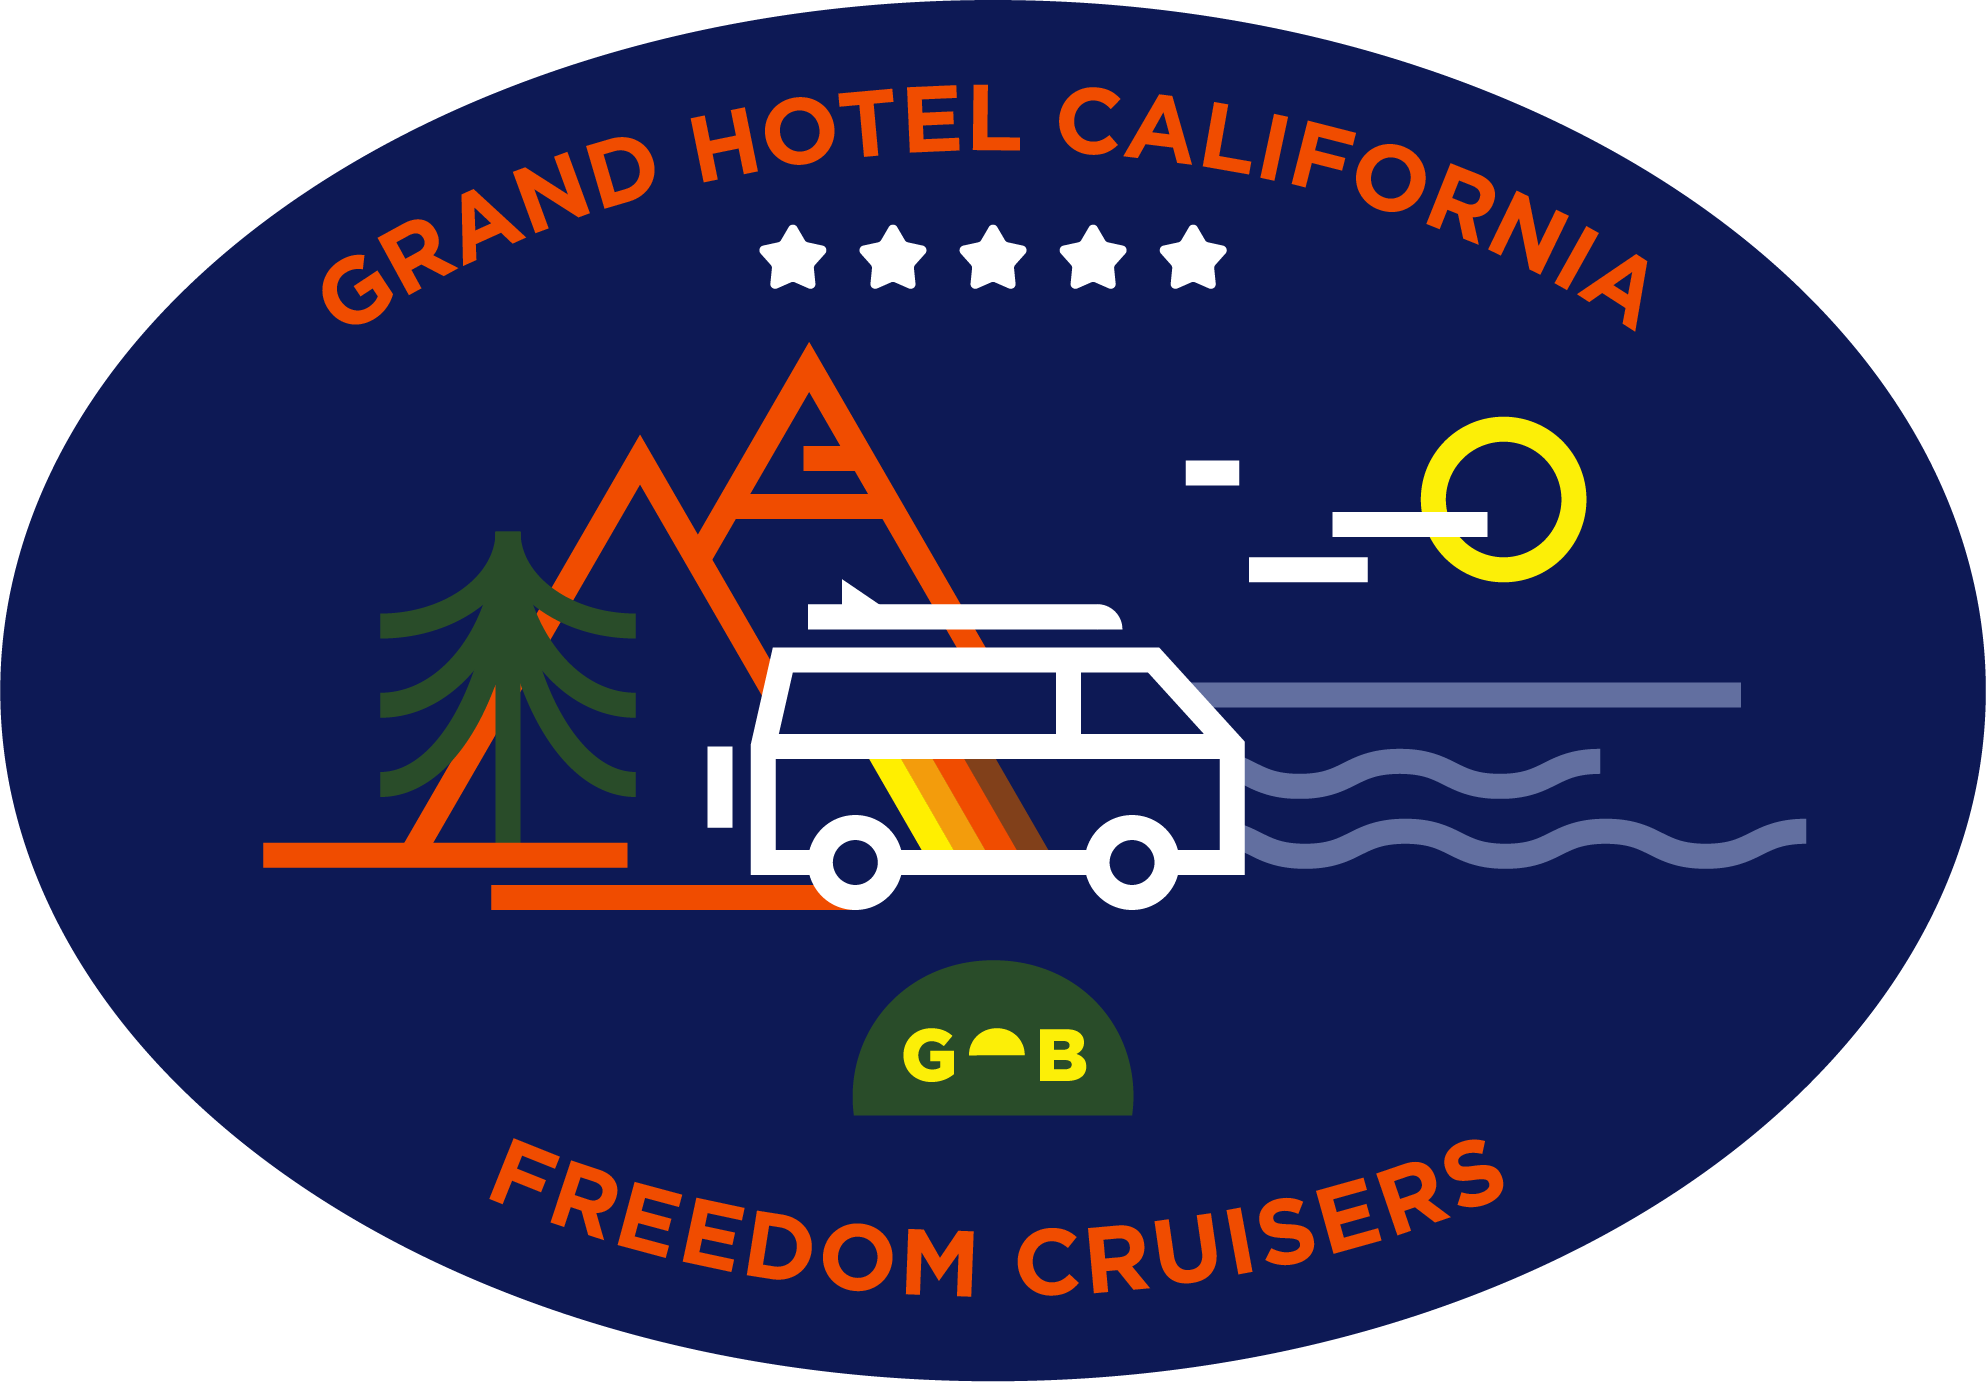 GoBeyond | Grand Hotel California